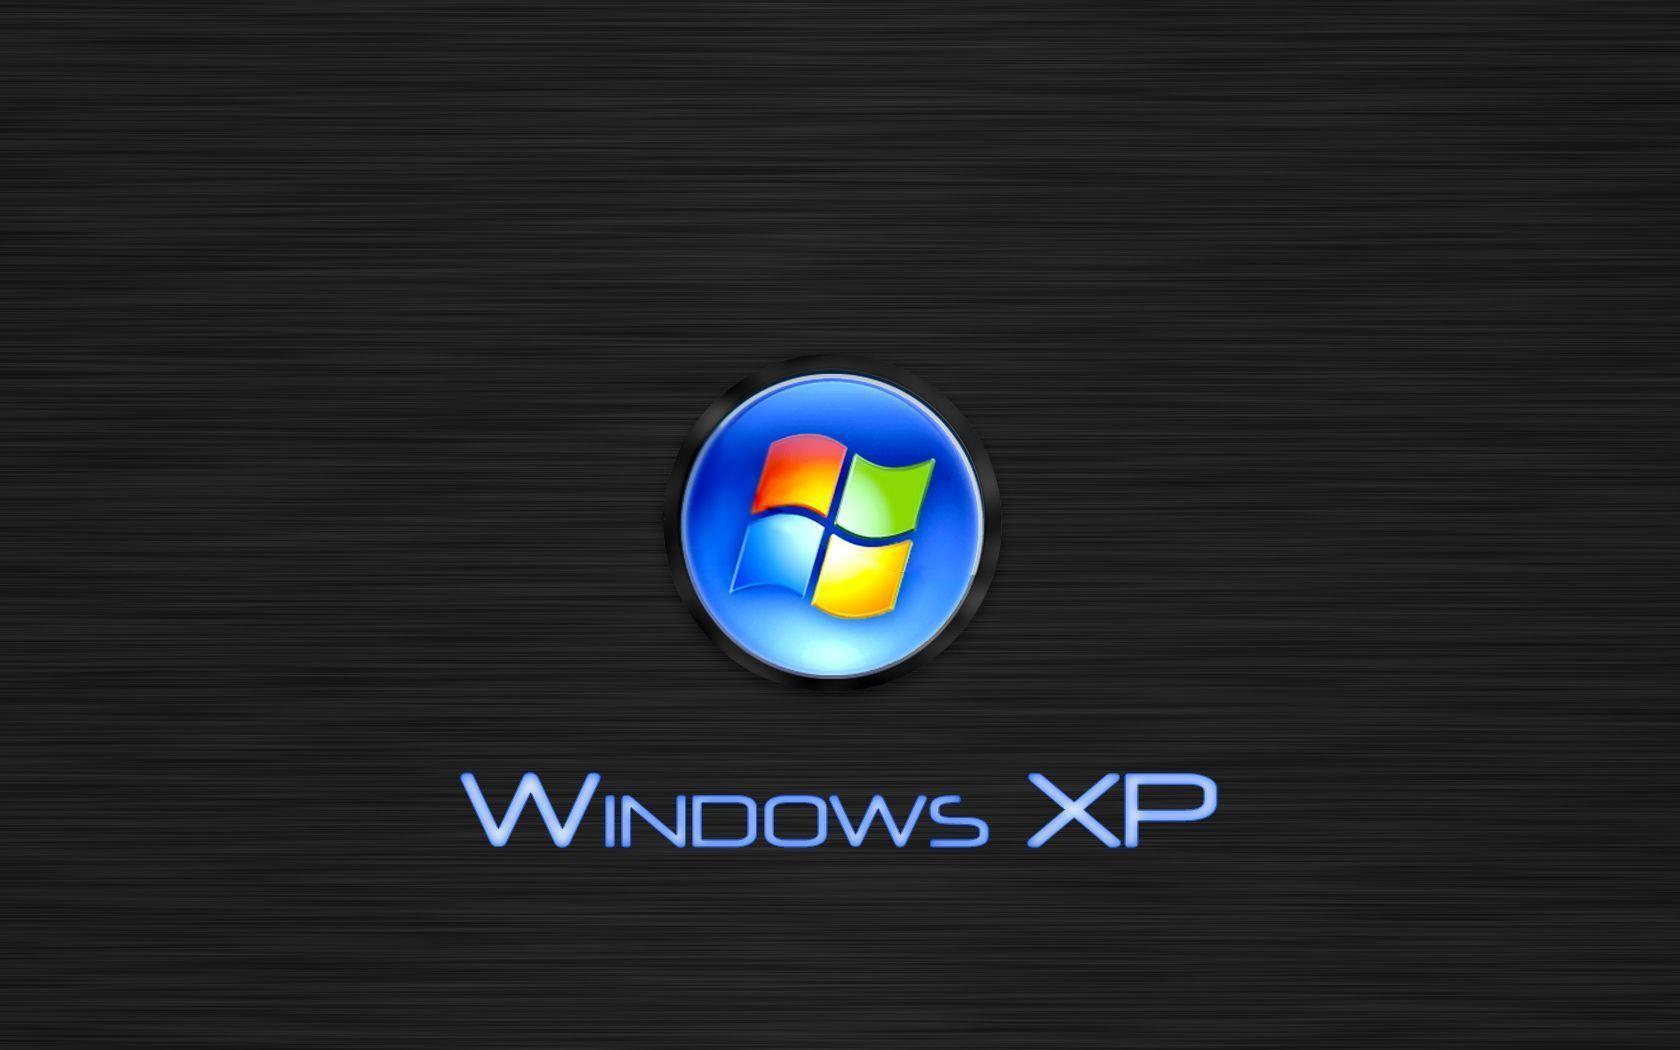 Wallpaper For > Windows Xp Desktop Wallpaper With Icon